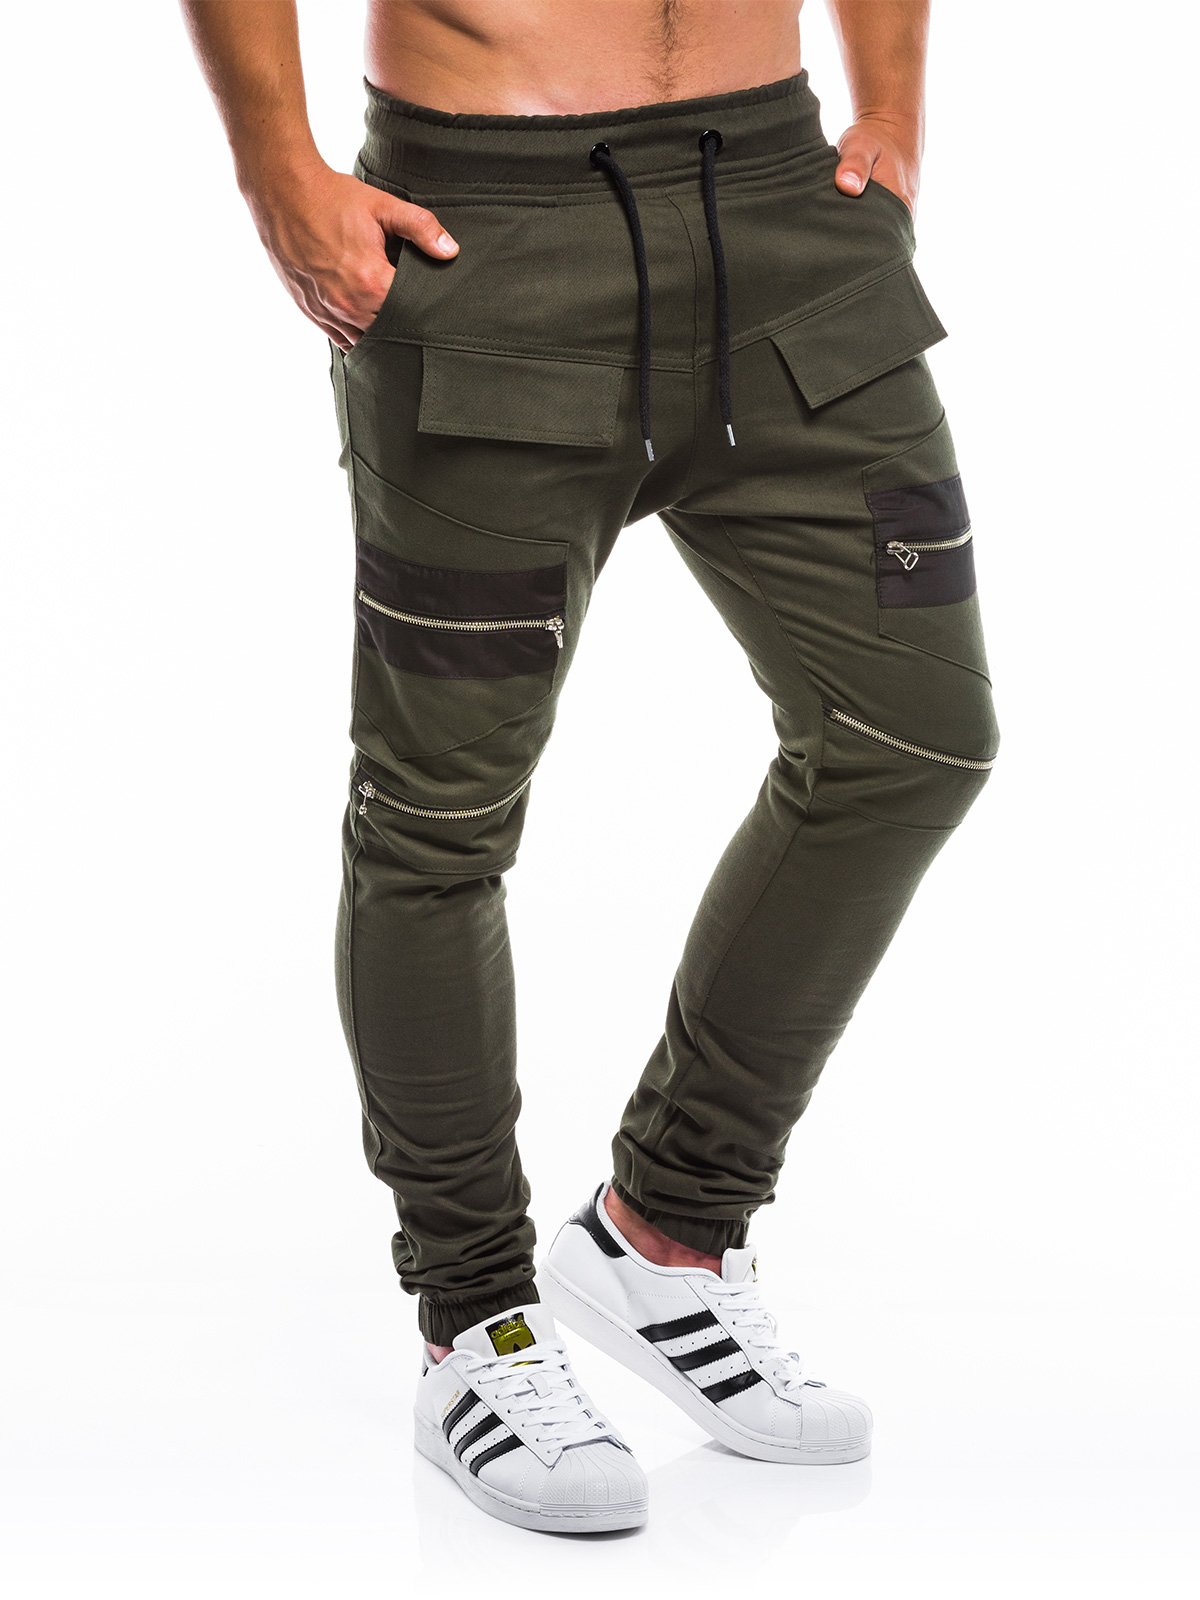 Men's pants joggers P708 - khaki | MODONE wholesale - Clothing For Men